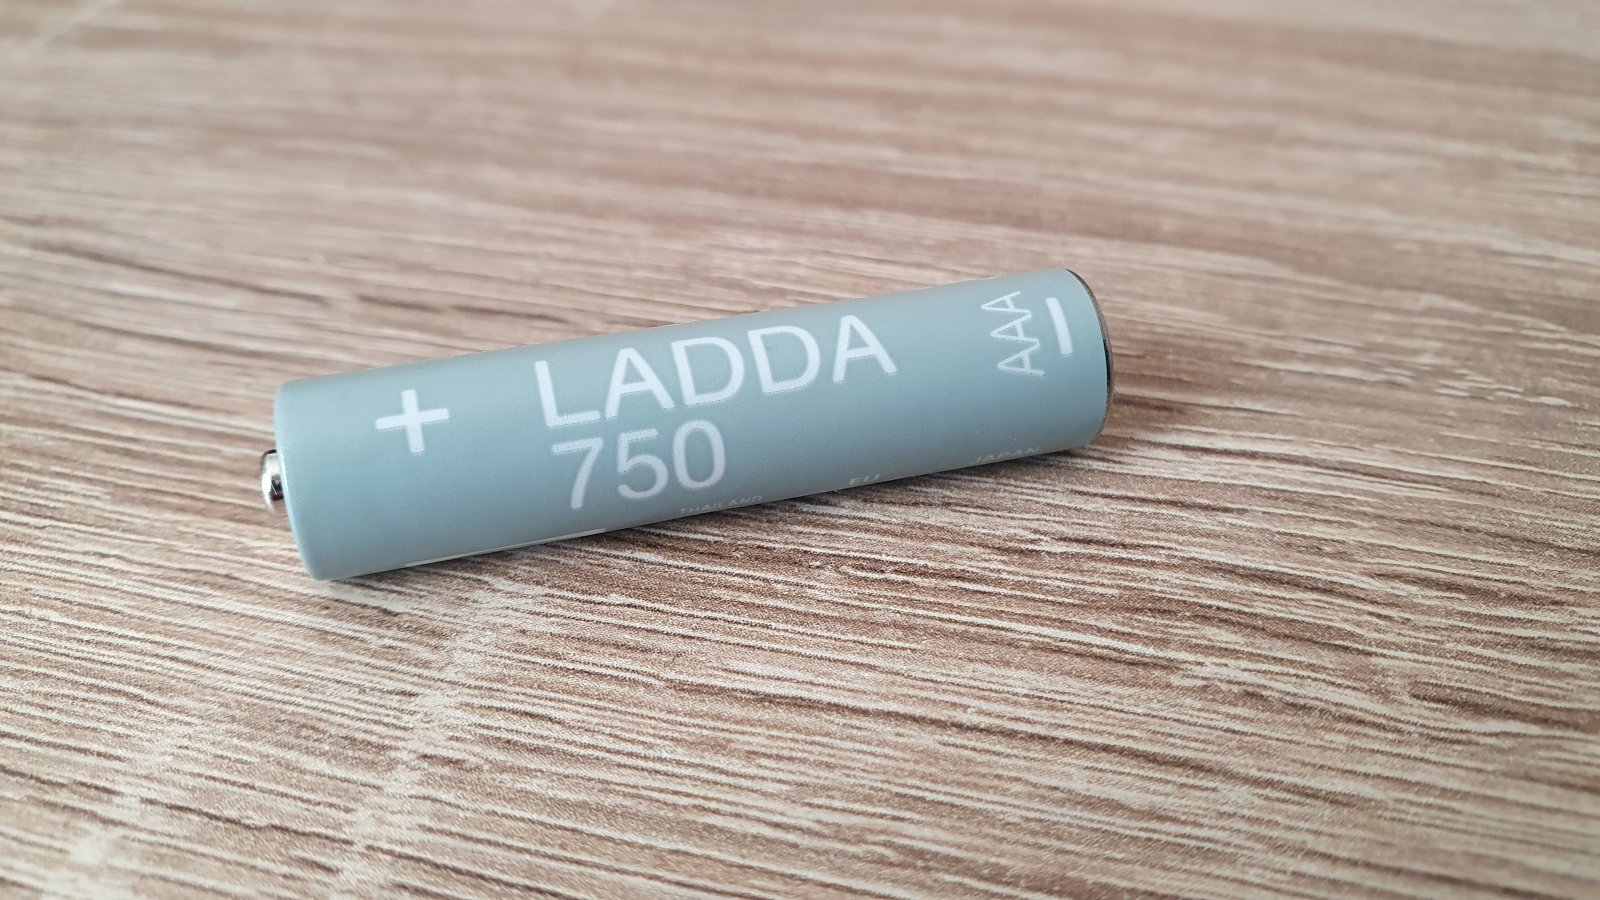 IKEA LADDA 750